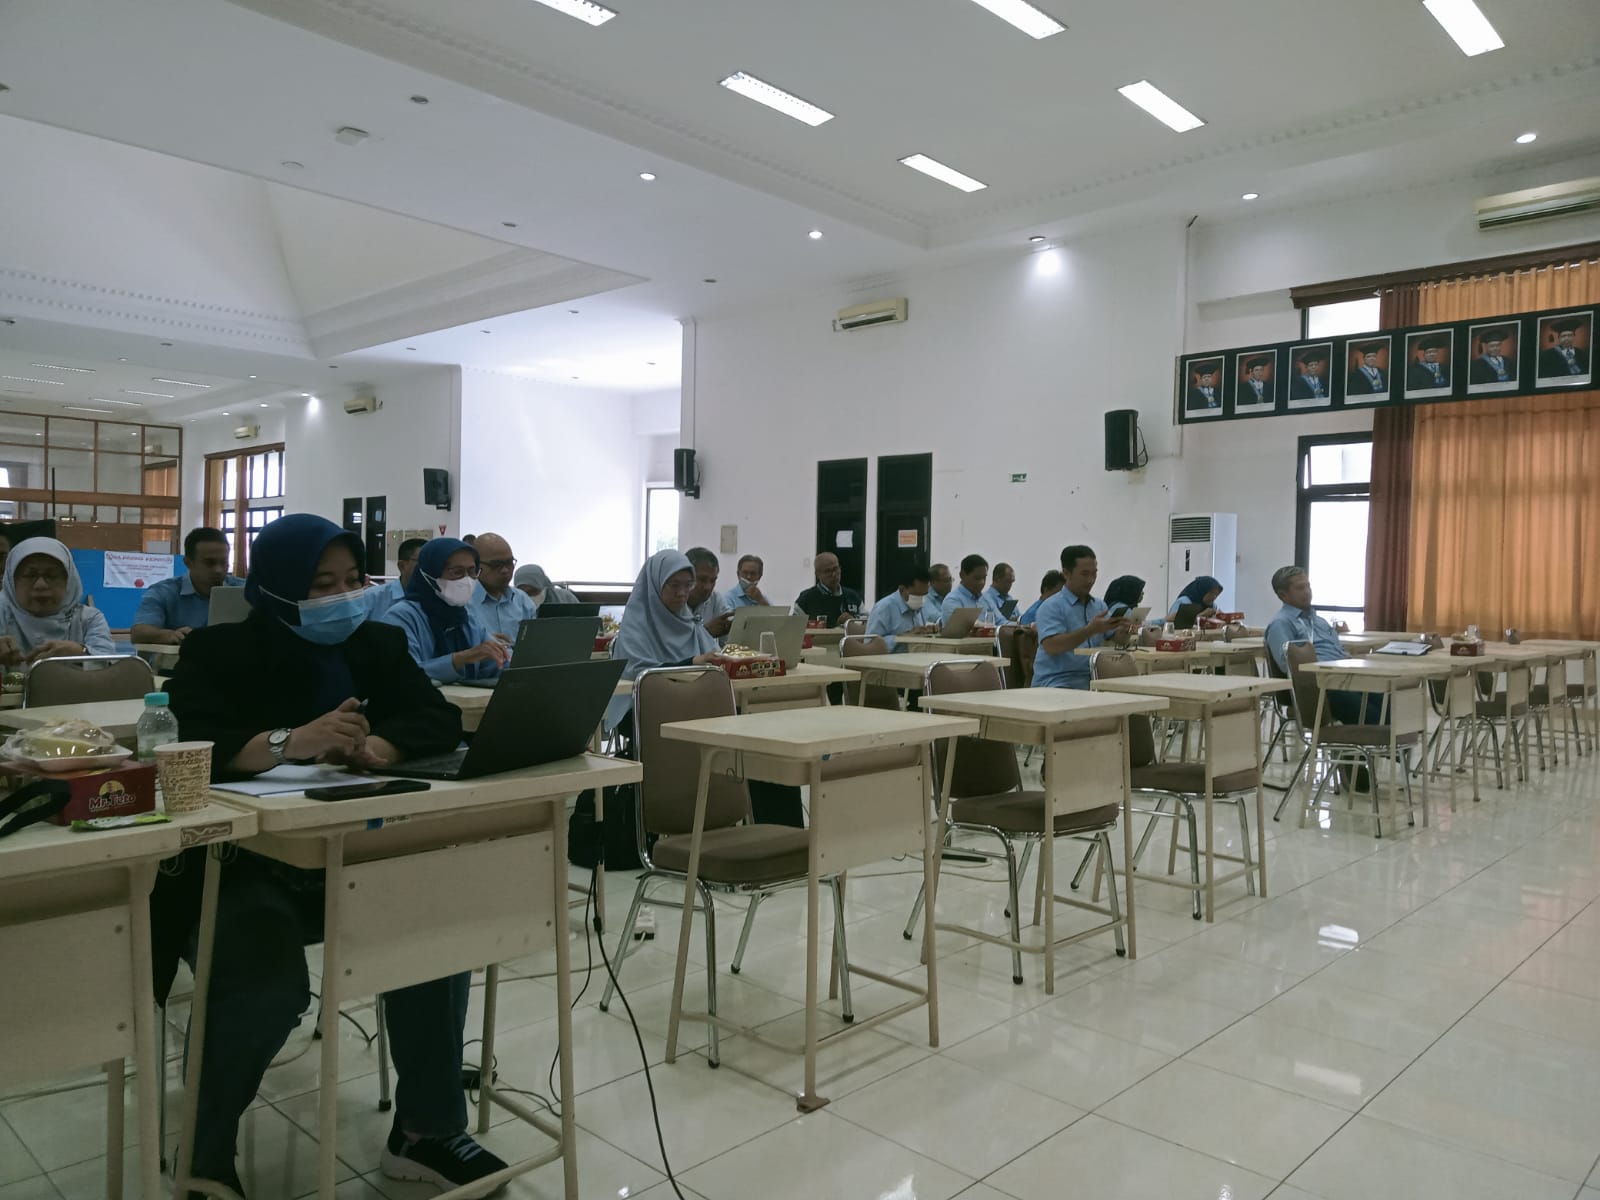 Rapat Tinjauan Manajemen (RTM) dan Rapat Monitoring Hasil Tindak Lanjut (RMHTL) di Fakultas Teknik Universitas Negeri Yogyakarta: Tinjauan Intensif untuk Peningkatan Mutu